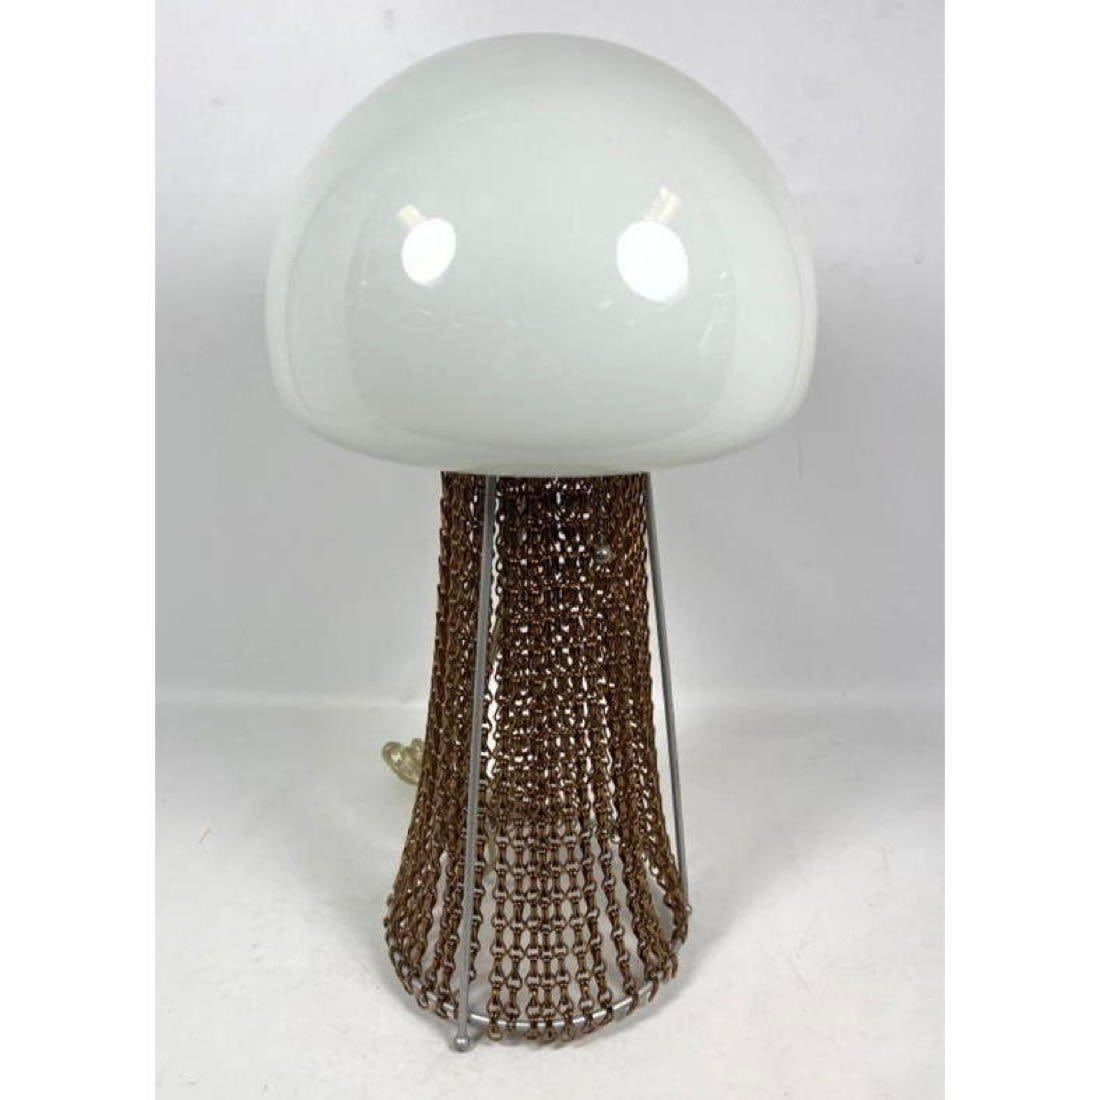 Custom Decorative Table Lamp. White